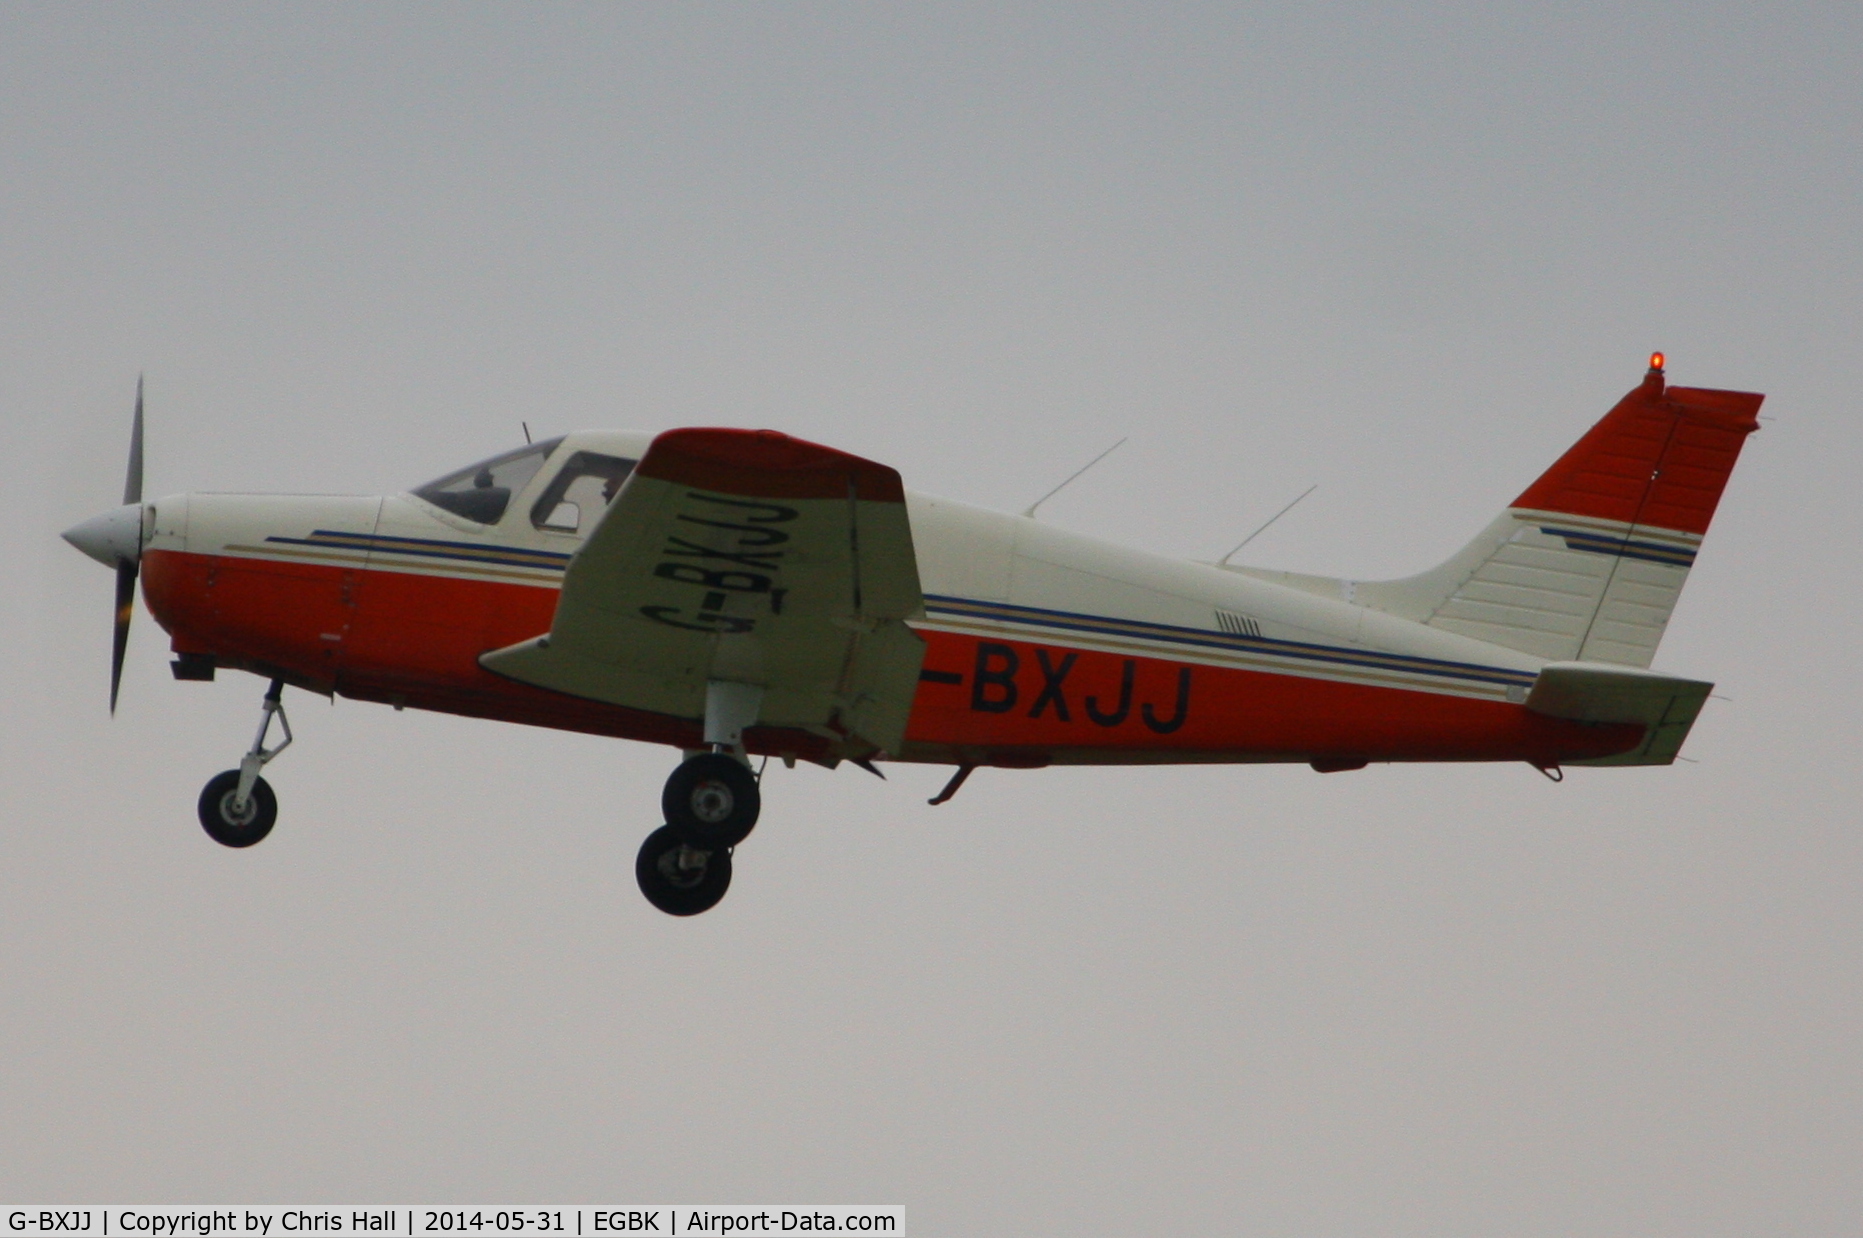 G-BXJJ, 1989 Piper PA-28-161 Cadet C/N 2841200, at AeroExpo 2014